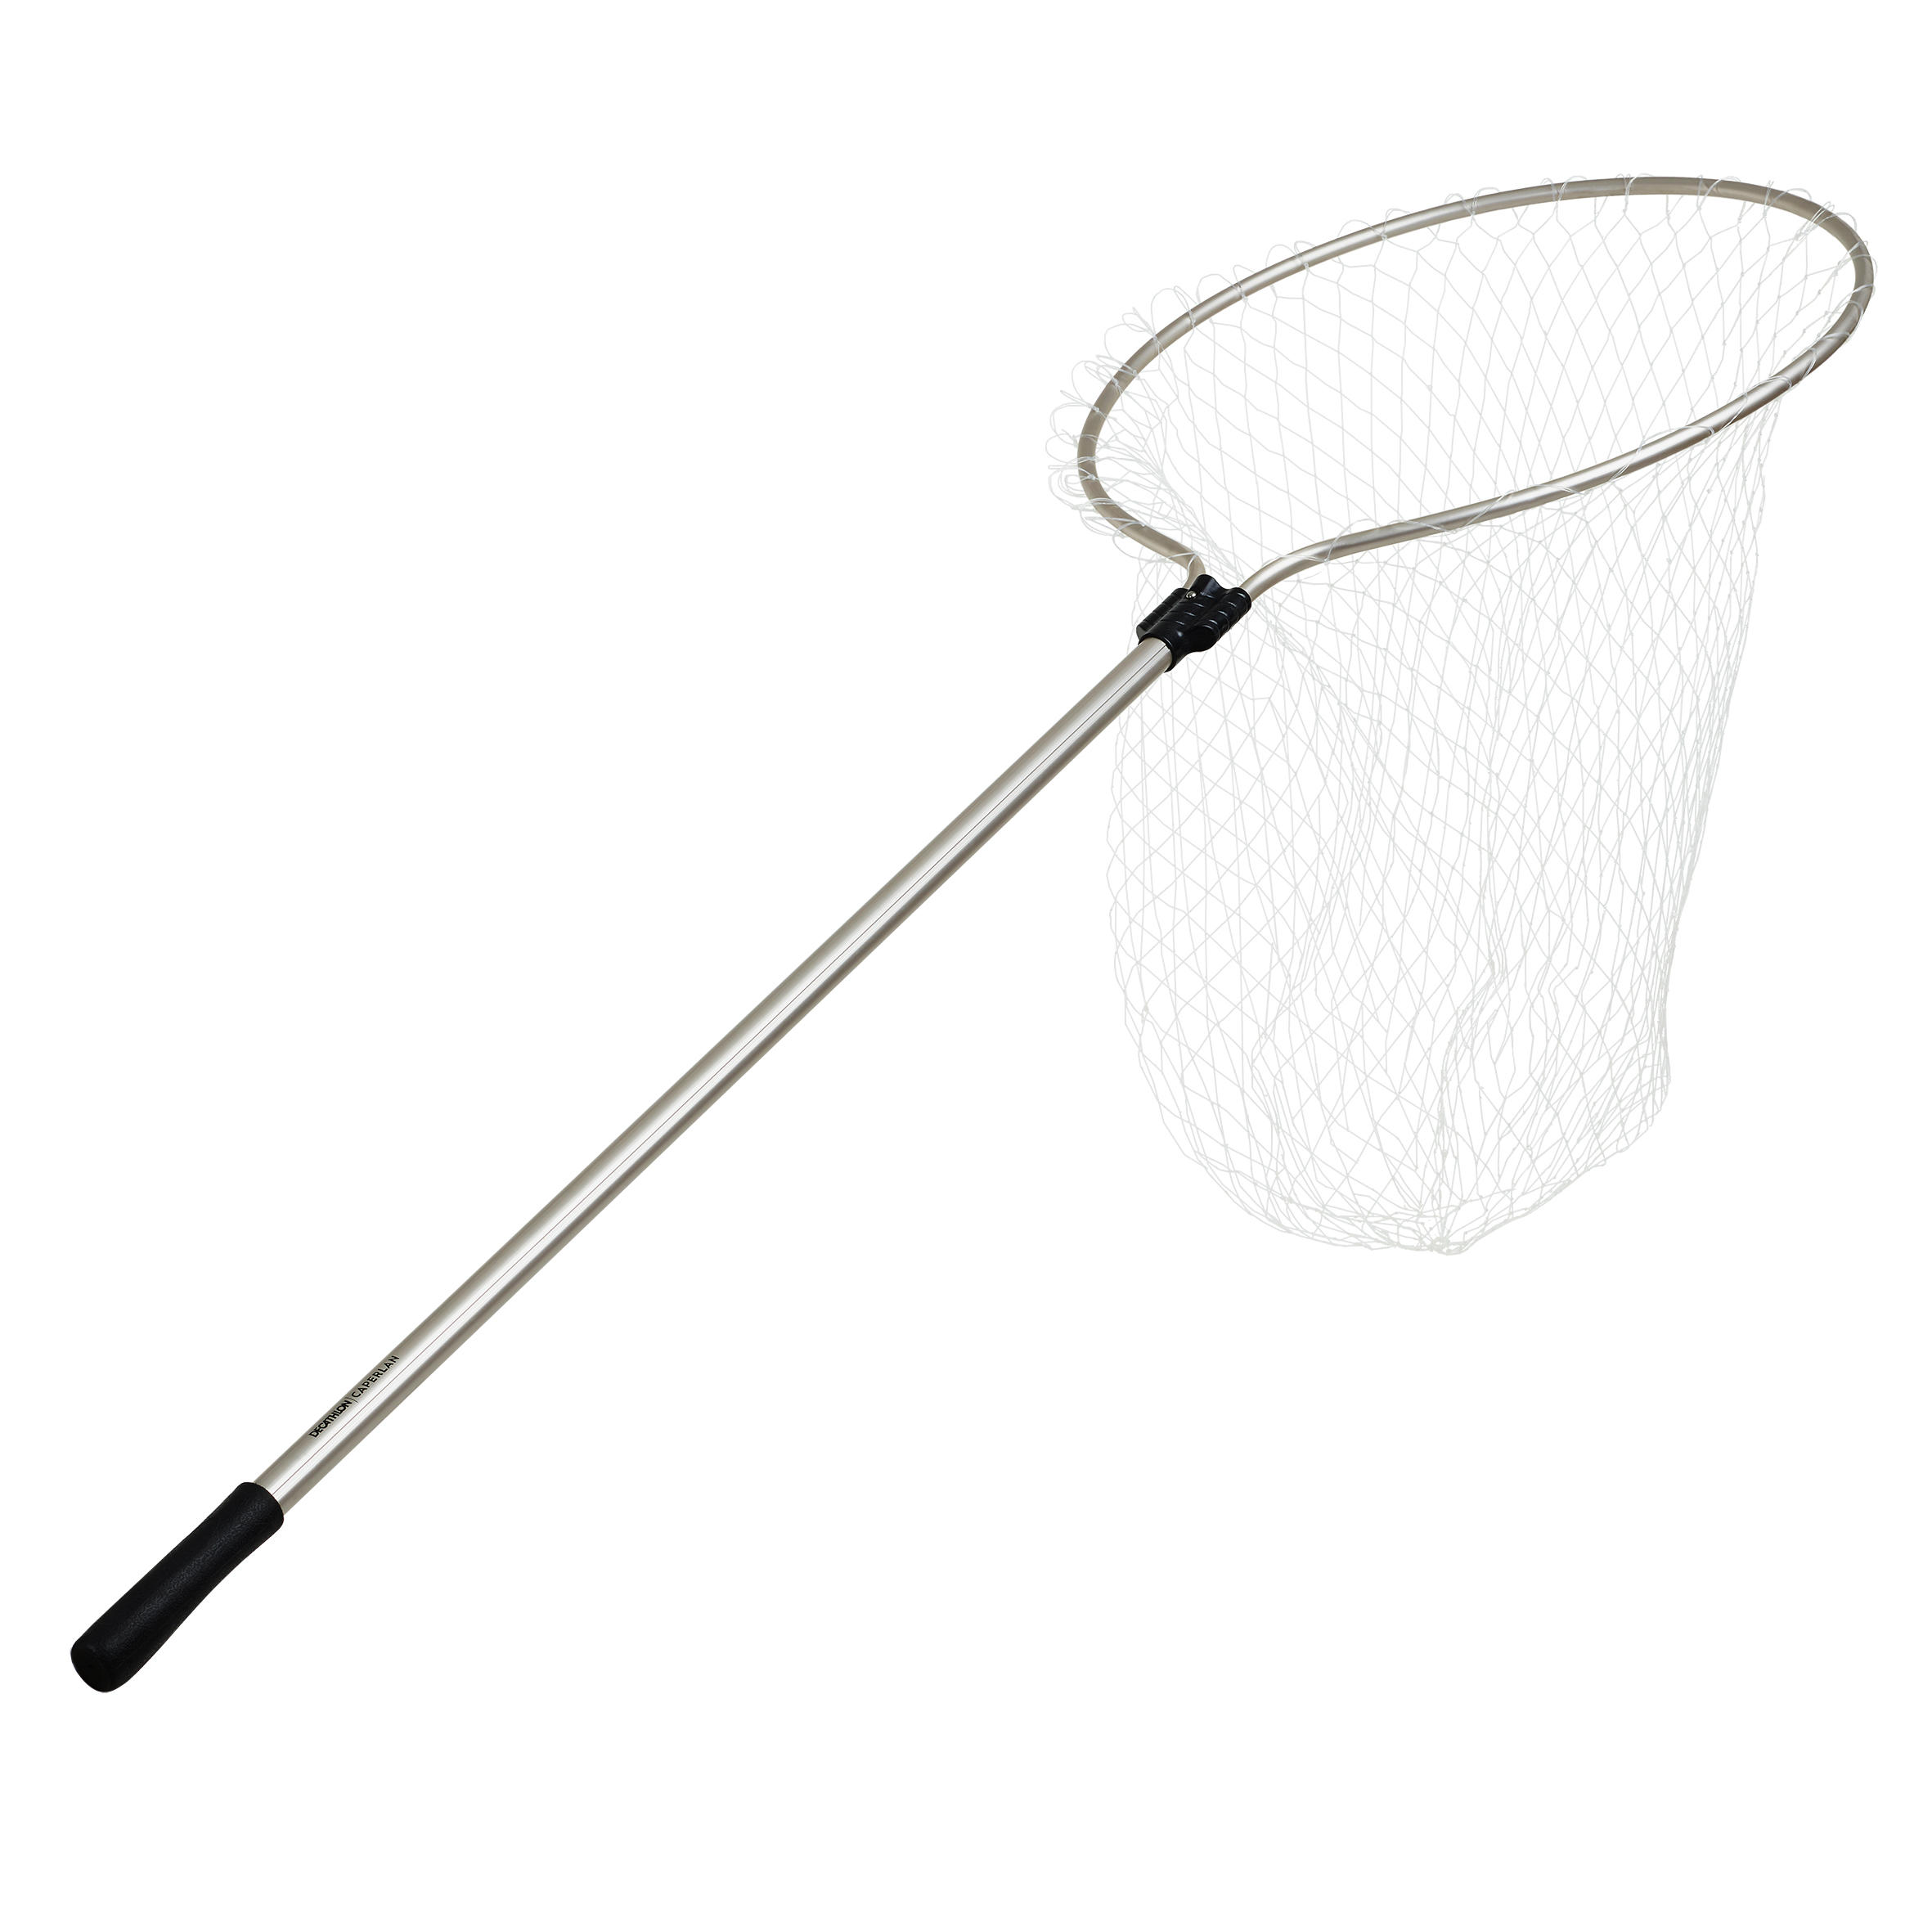 Fishing Landing Net 190cm - One Size By CAPERLAN | Decathlon